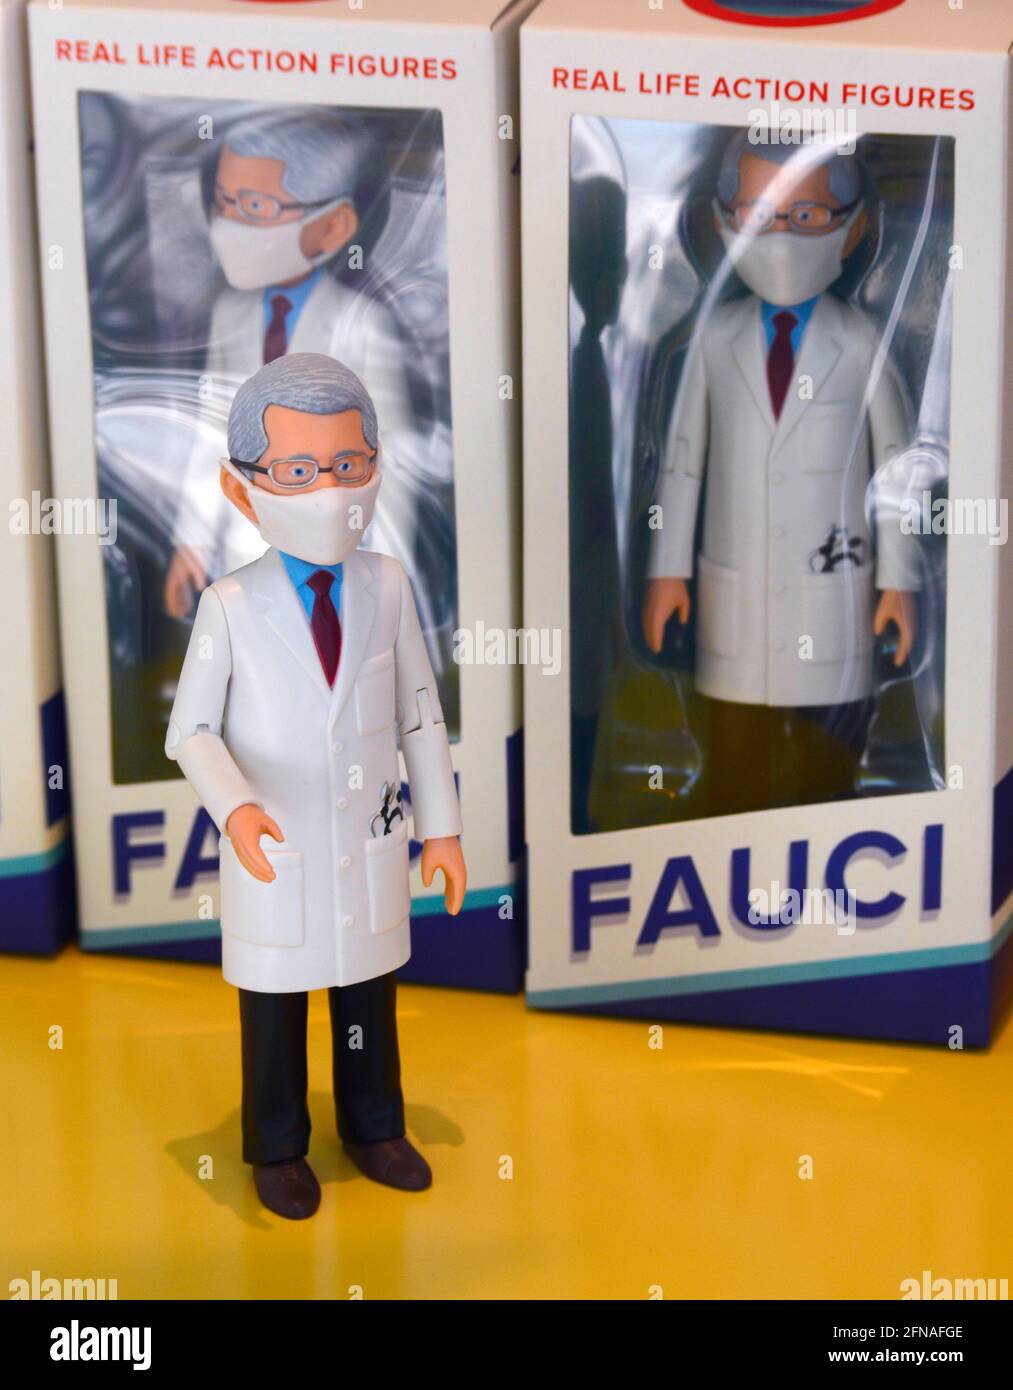 Action figure bambole Dr. Anthony Fauci, direttore del National Institute of Allergy and Infectious Diseases e consulente medico per il presidente. Foto Stock